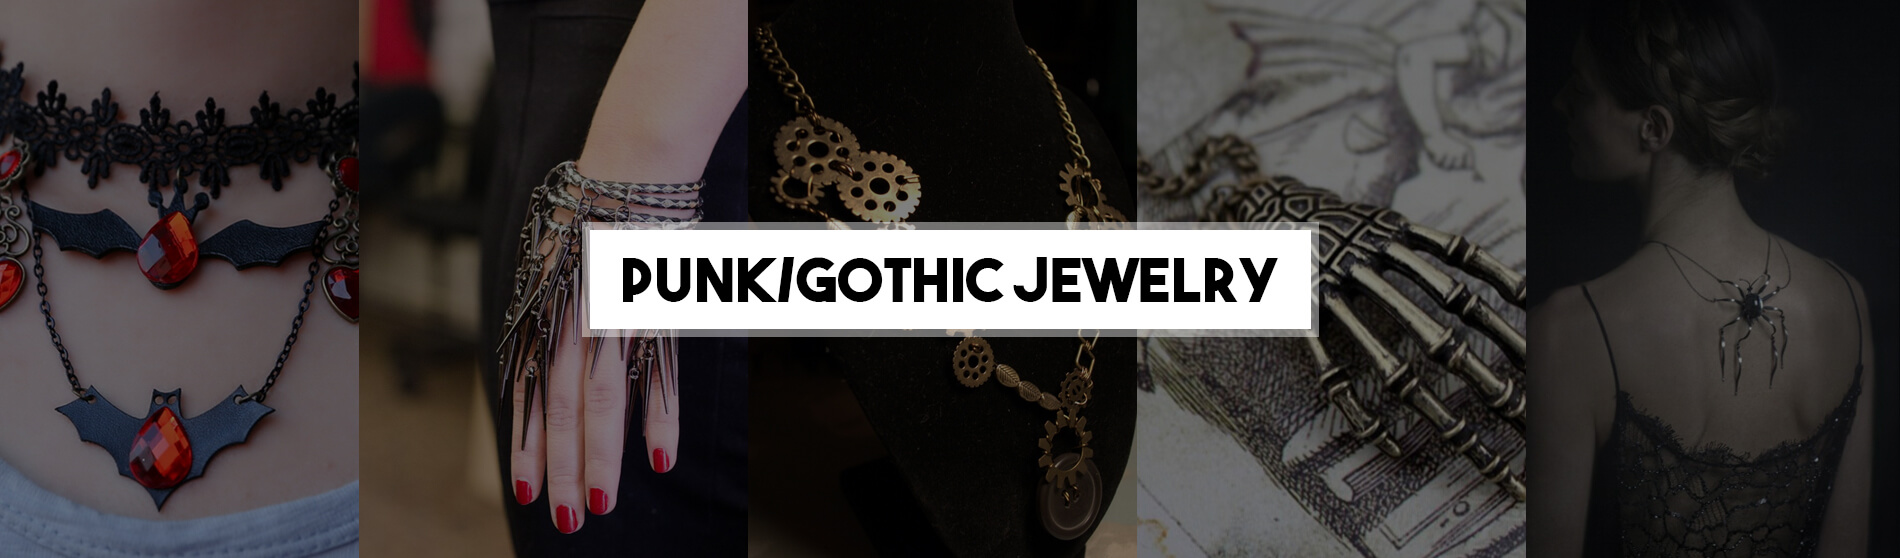 Glendale Halloween : Punk-Gothic-Jewelry